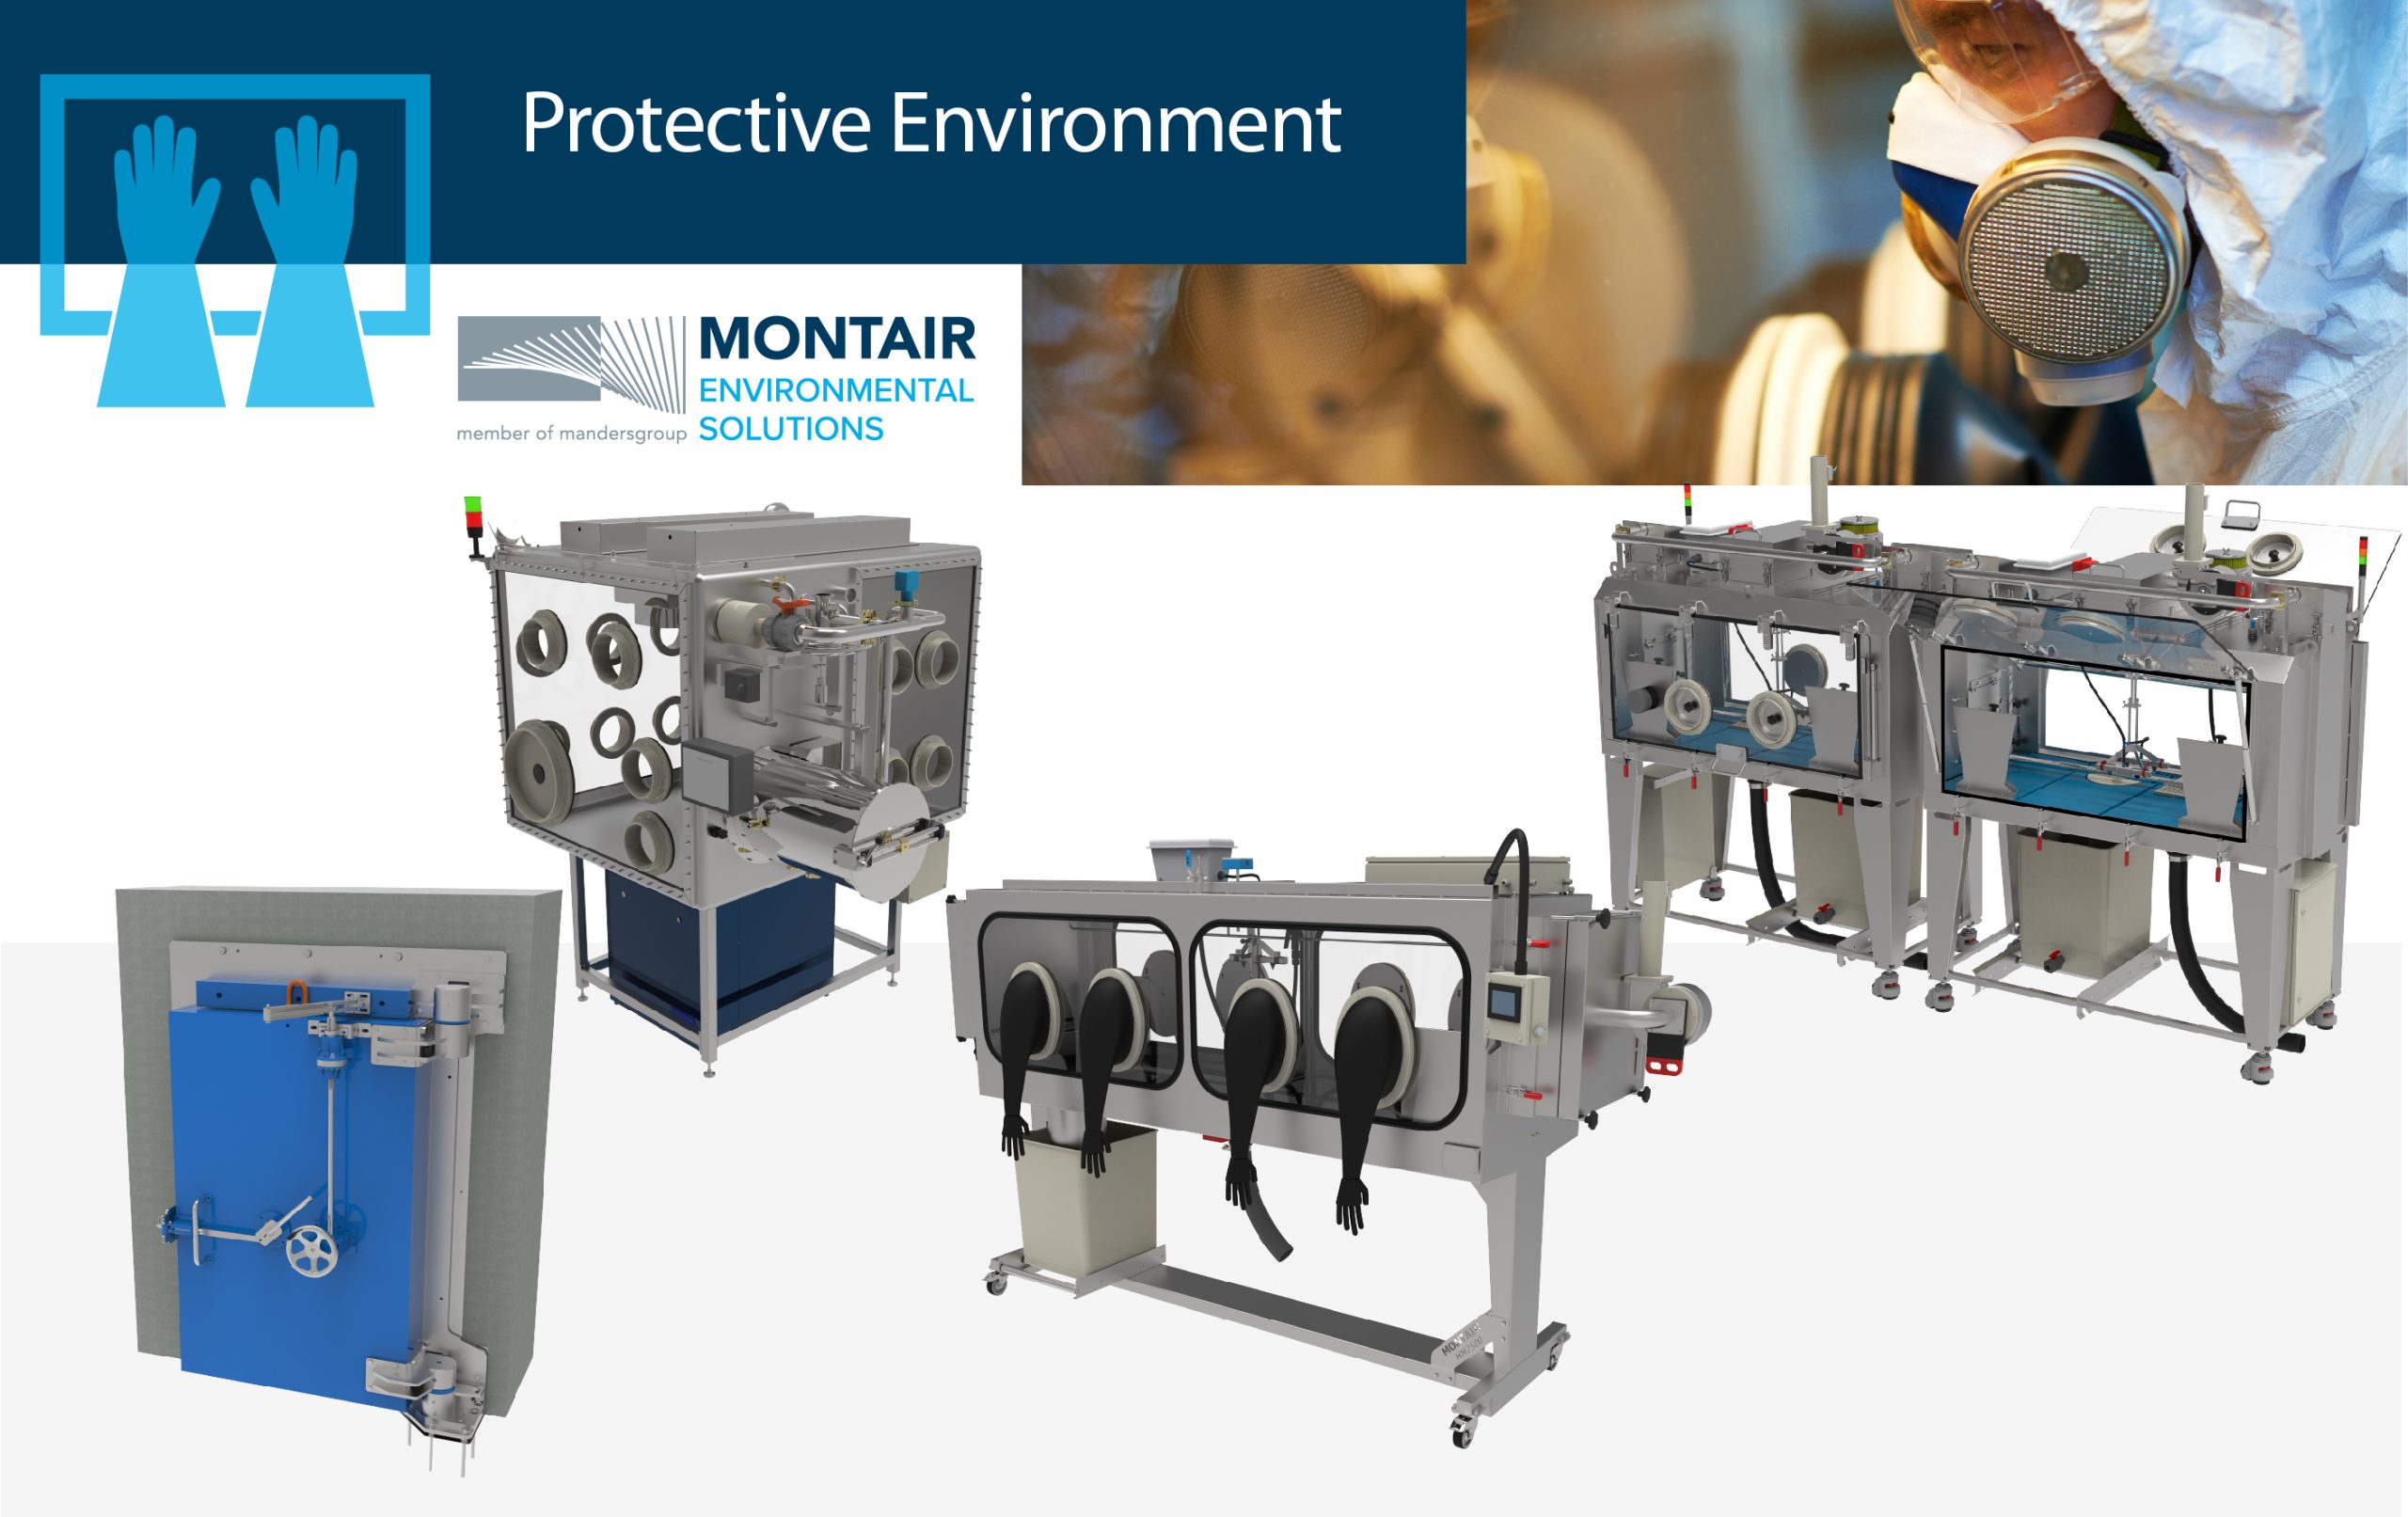 Montair Environmental Solutions - Protective Environment